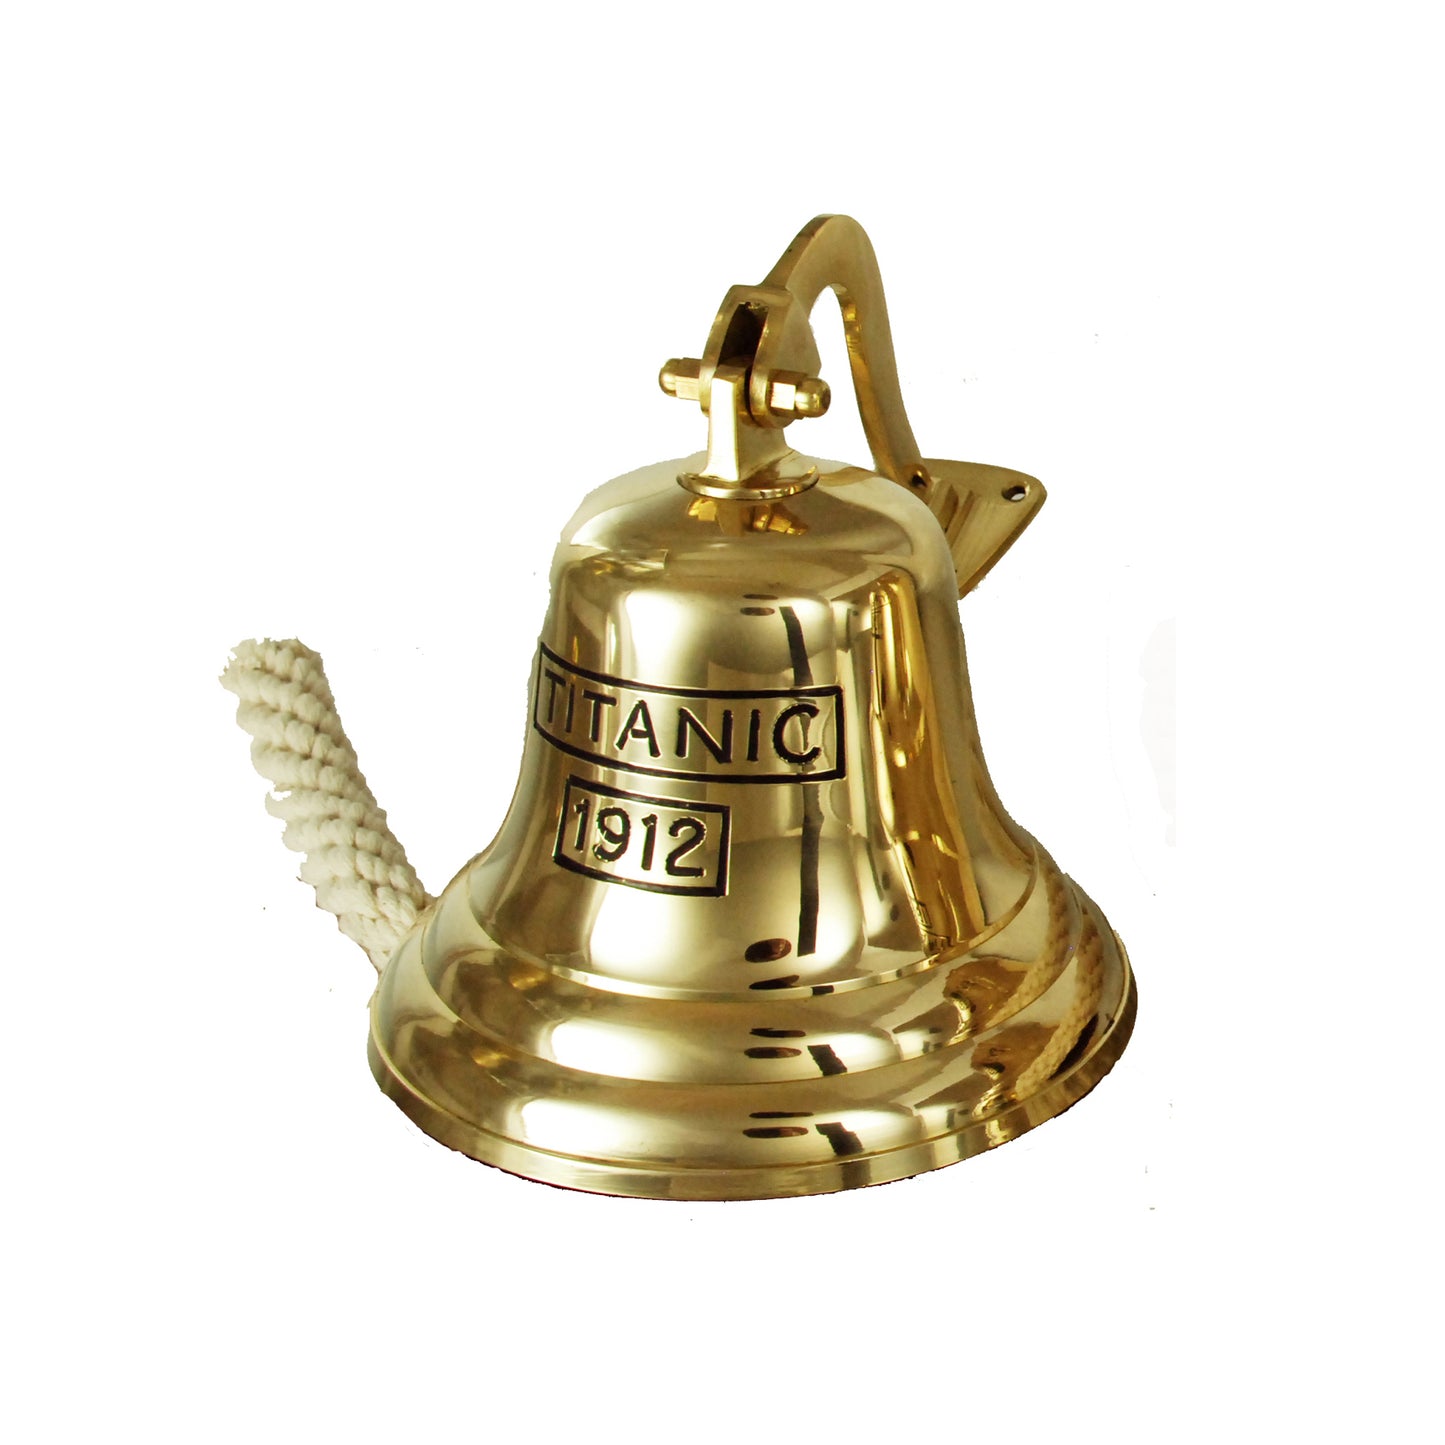 Buckingham Solid Bras Titanic 1912 Ship Bell, Last Orders Bell, Pub Bell, Door Bell, Wall Mountable Bell. 6"/ 15 cm